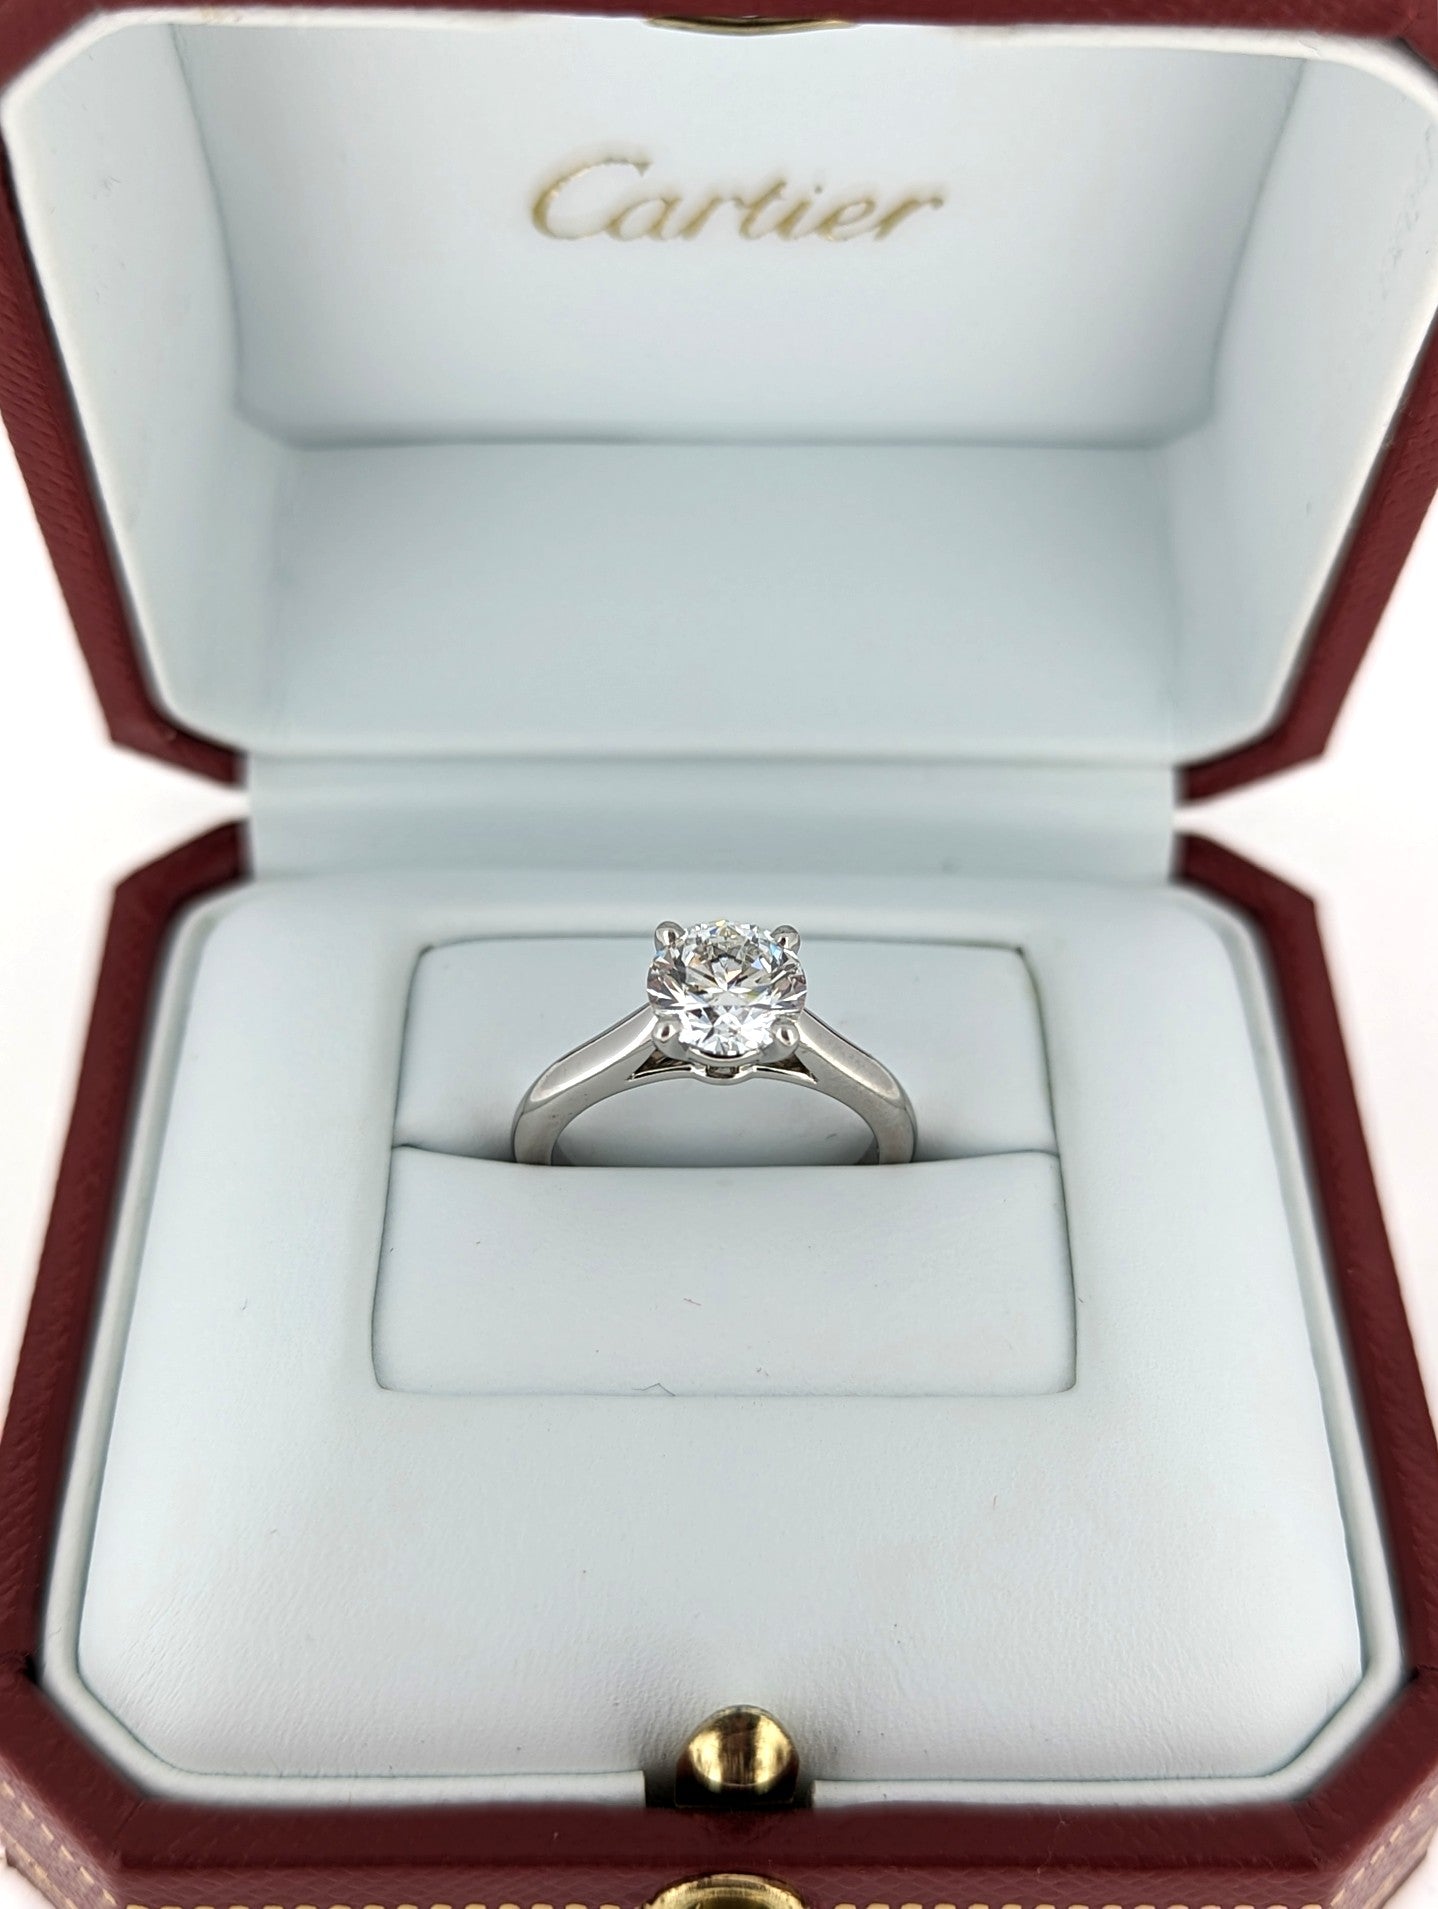 Cartier 1.22 Carat E/VVS2 Round Diamond Solitaire Engagement Ring in Platinum